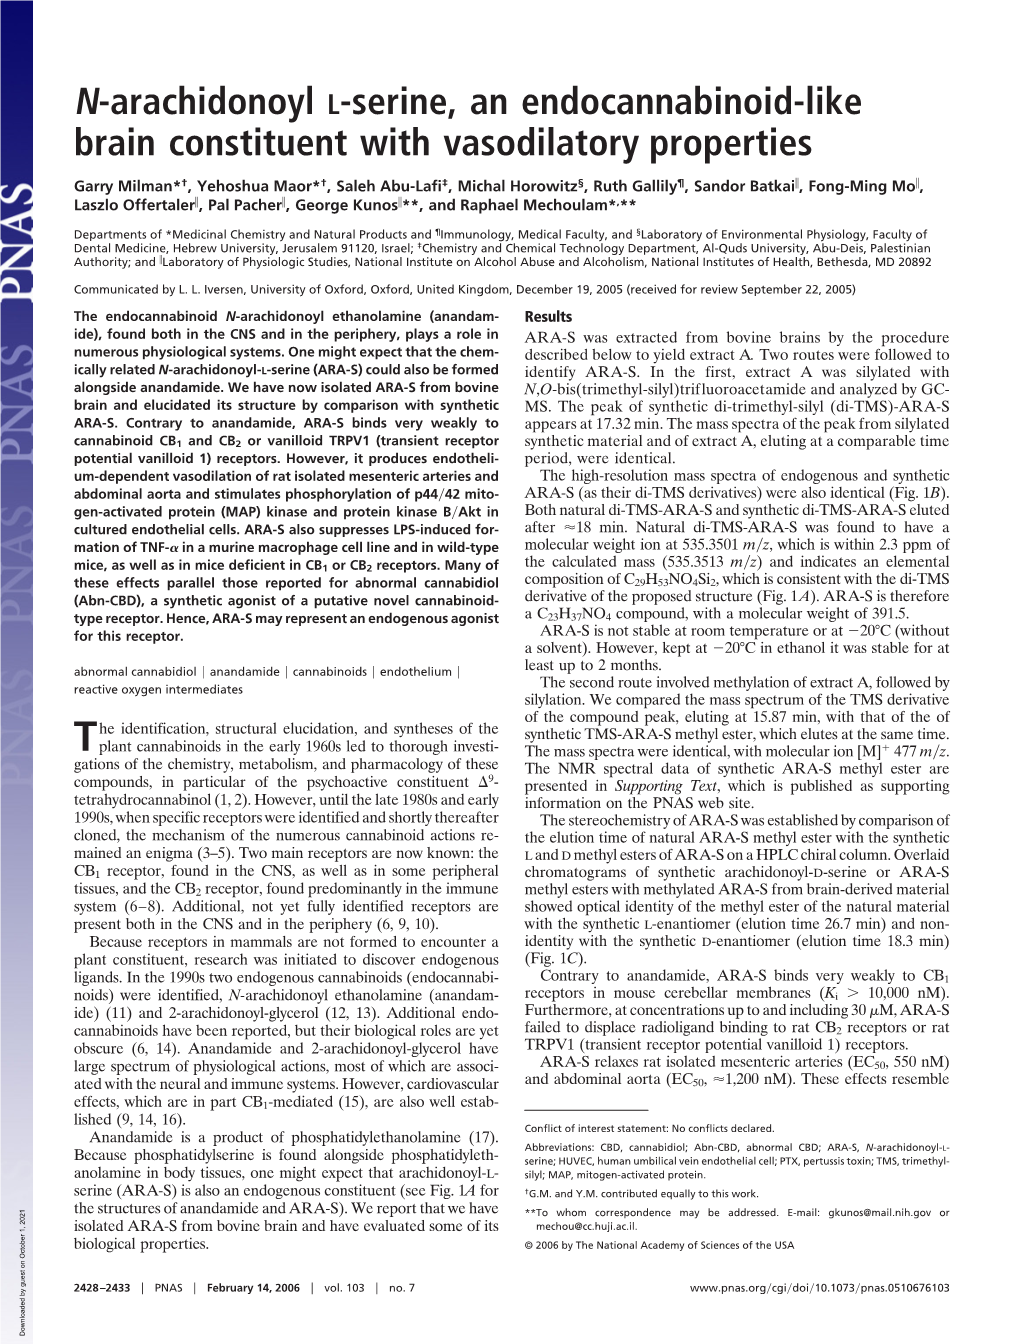 N-Arachidonoyl L-Serine, an Endocannabinoid-Like Brain Constituent with Vasodilatory Properties